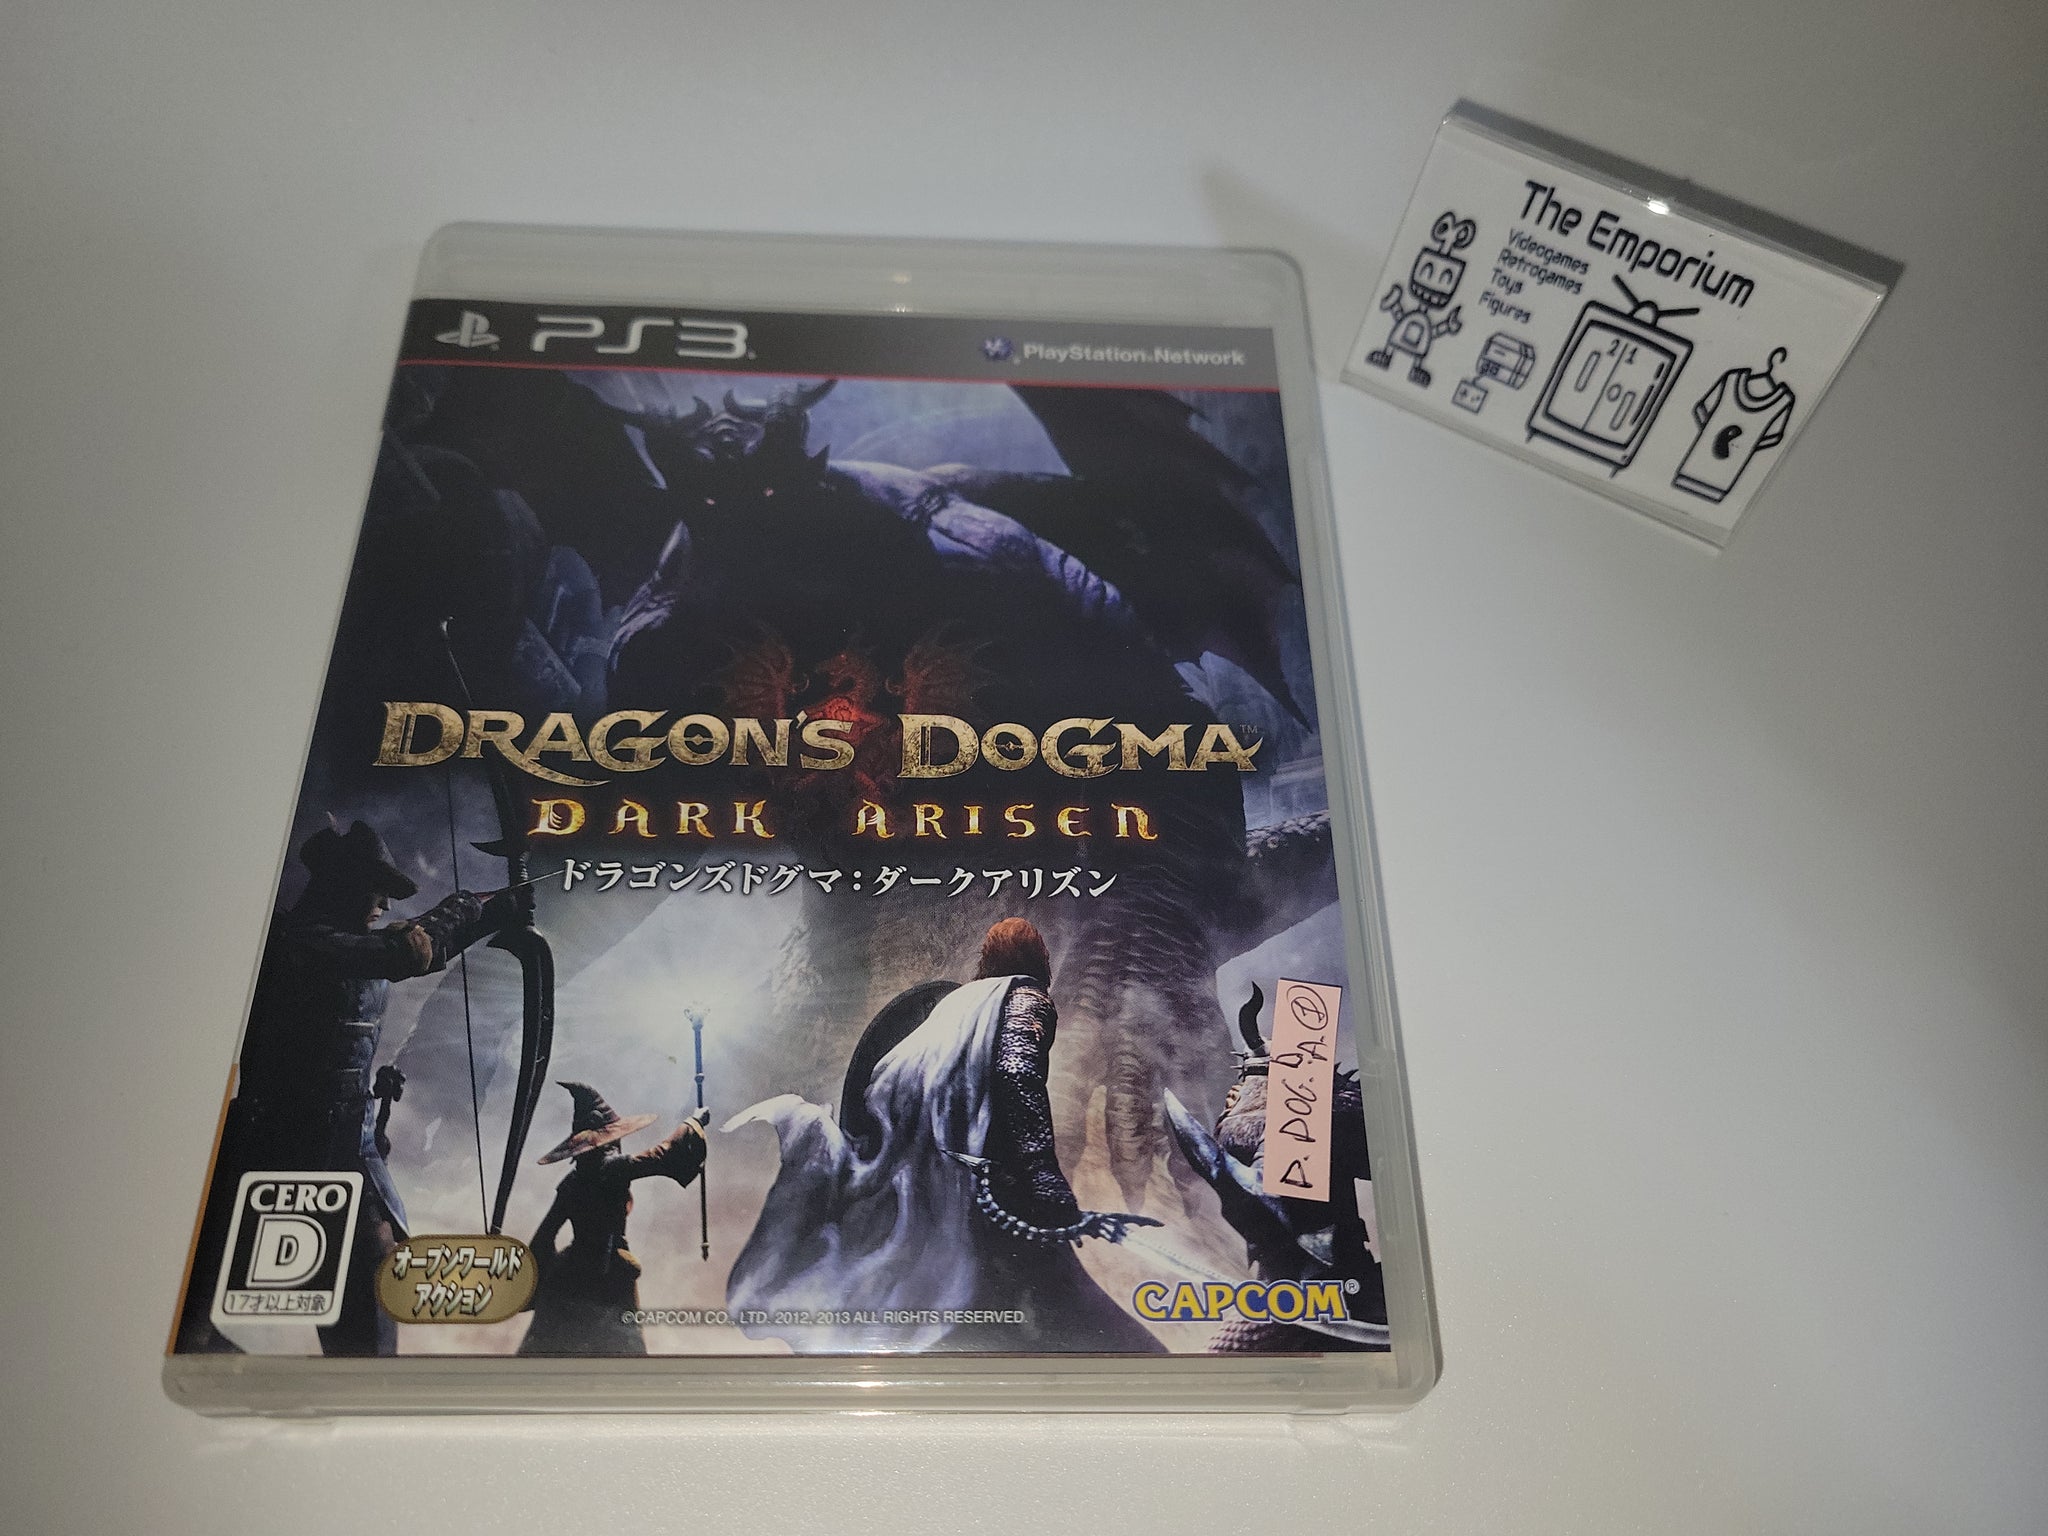  Dragon's Dogma: Dark Arisen - Playstation 3